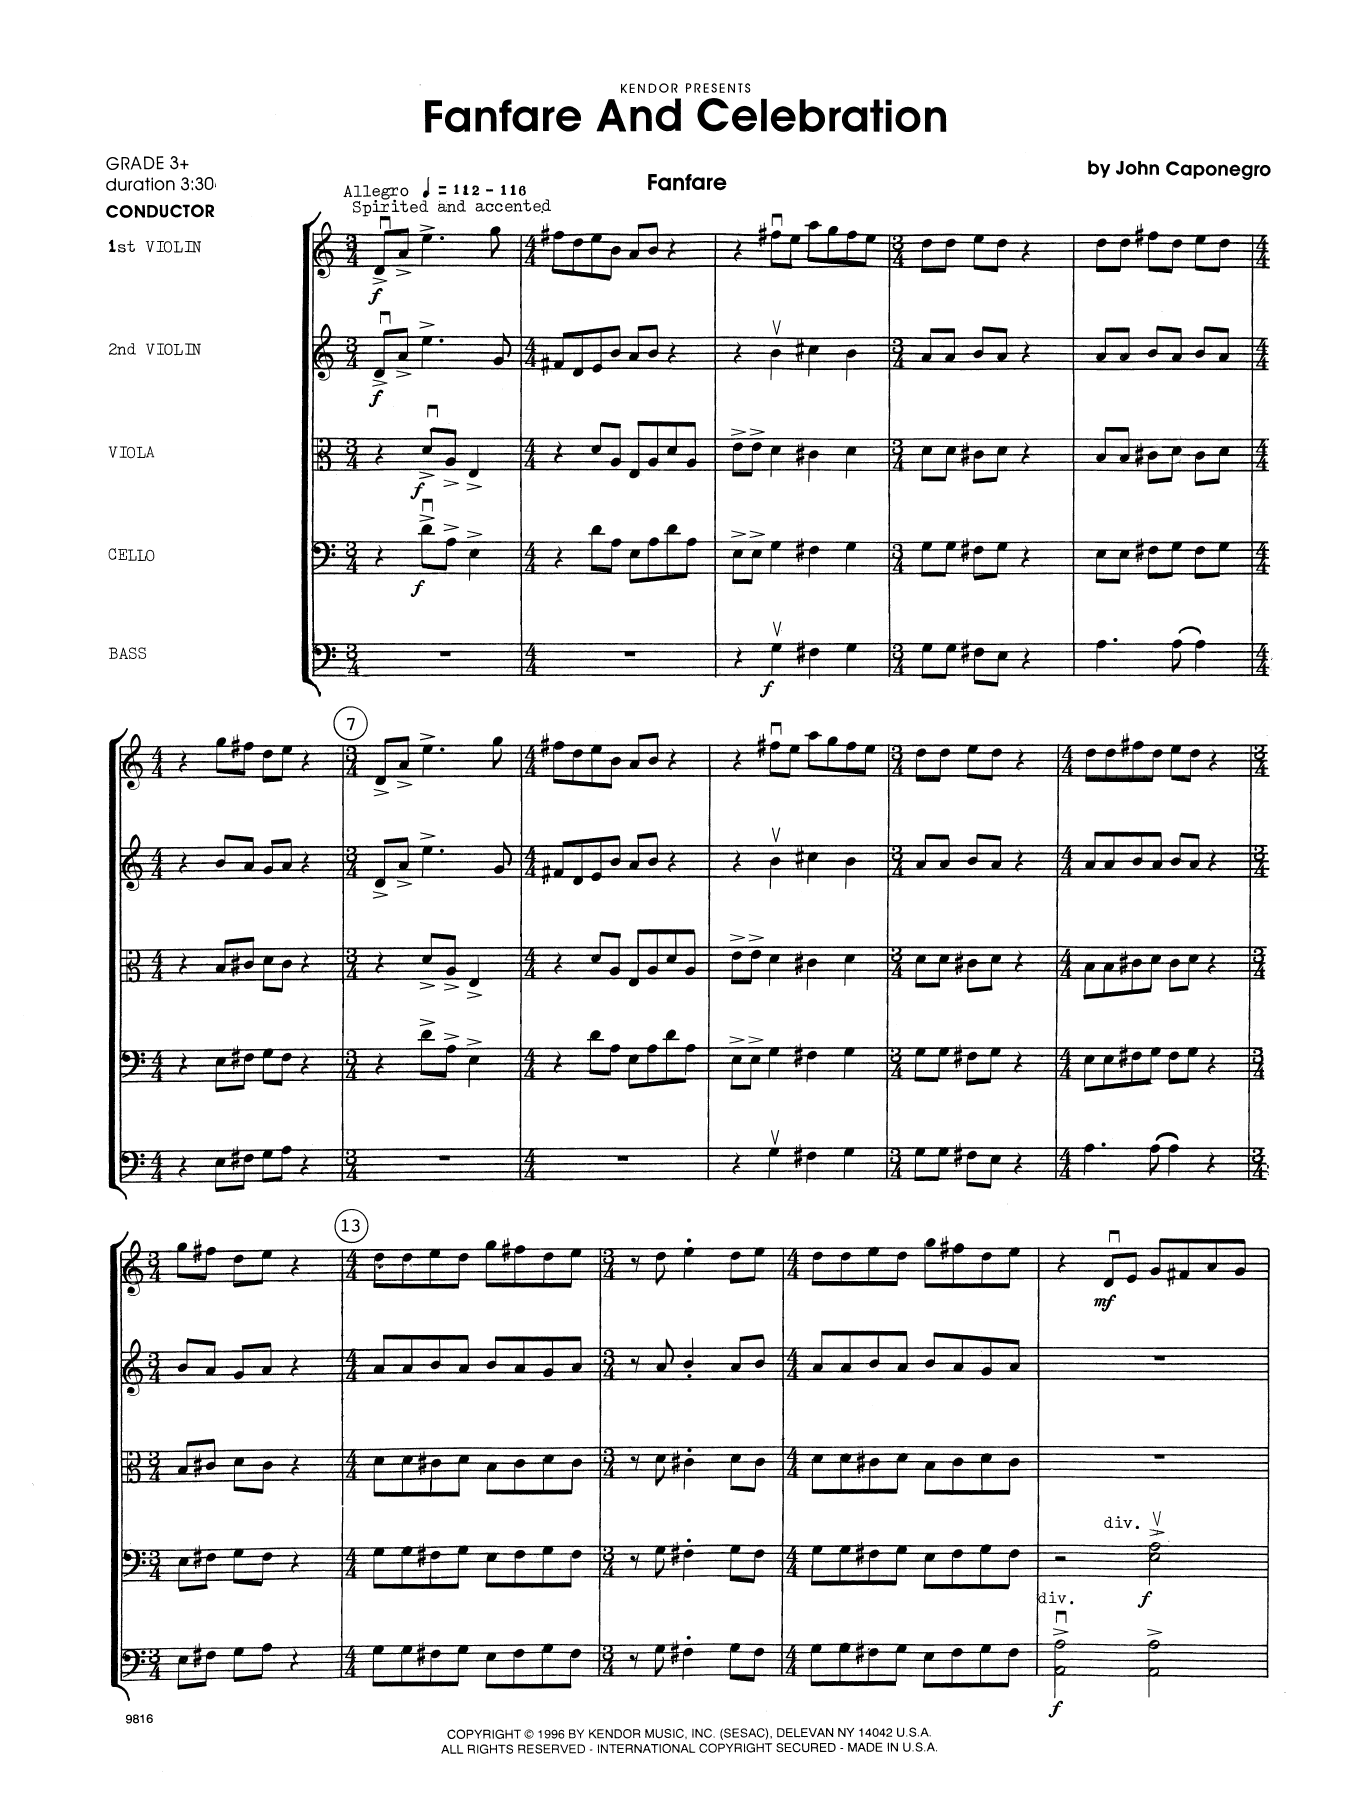 Download John Caponegro Fanfare and Celebration - Full Score Sheet Music